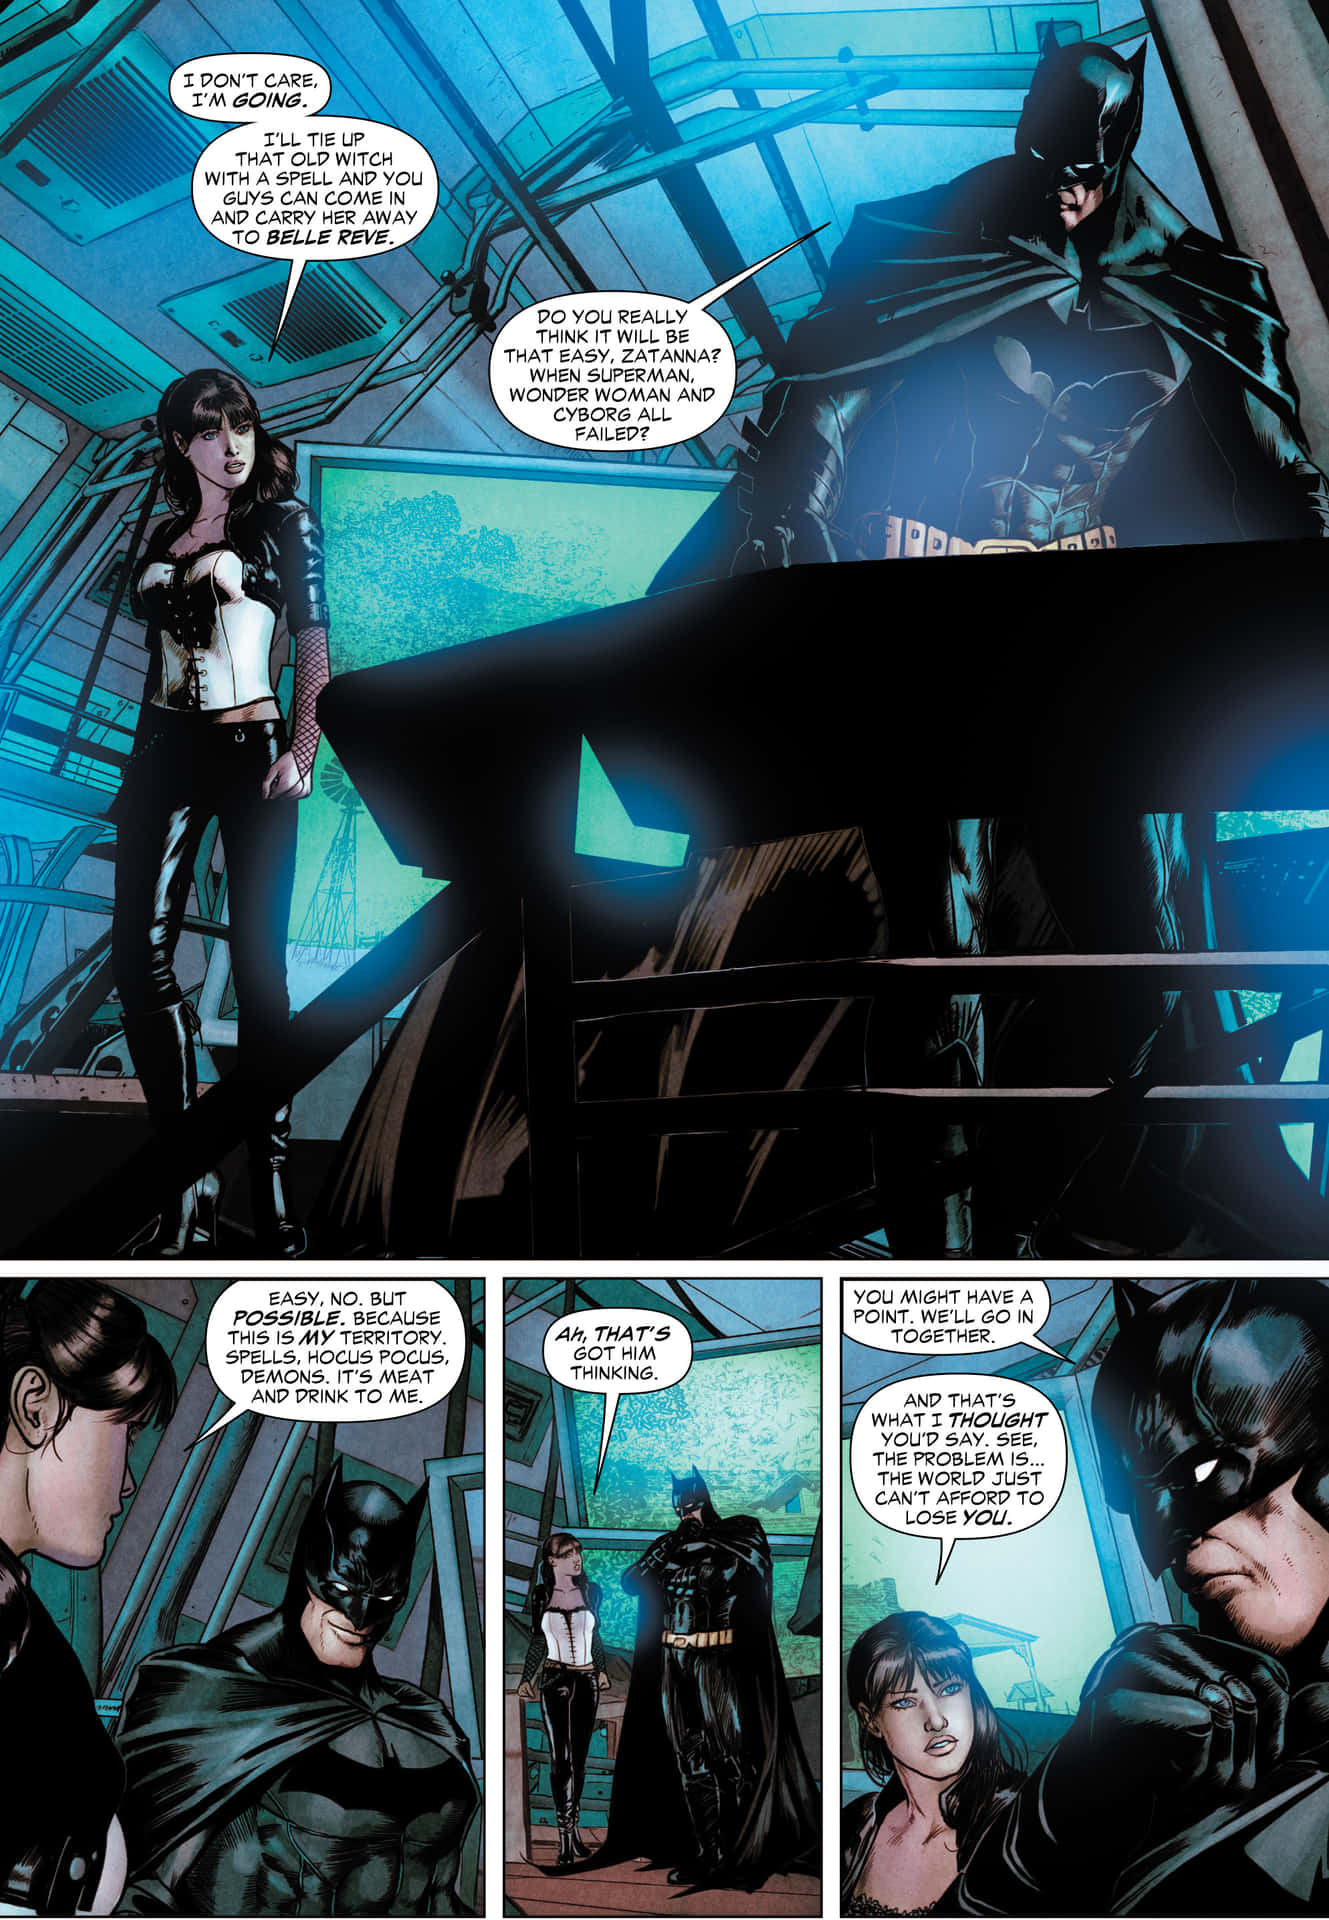 The Justice League Dark Unites in Action Wallpaper